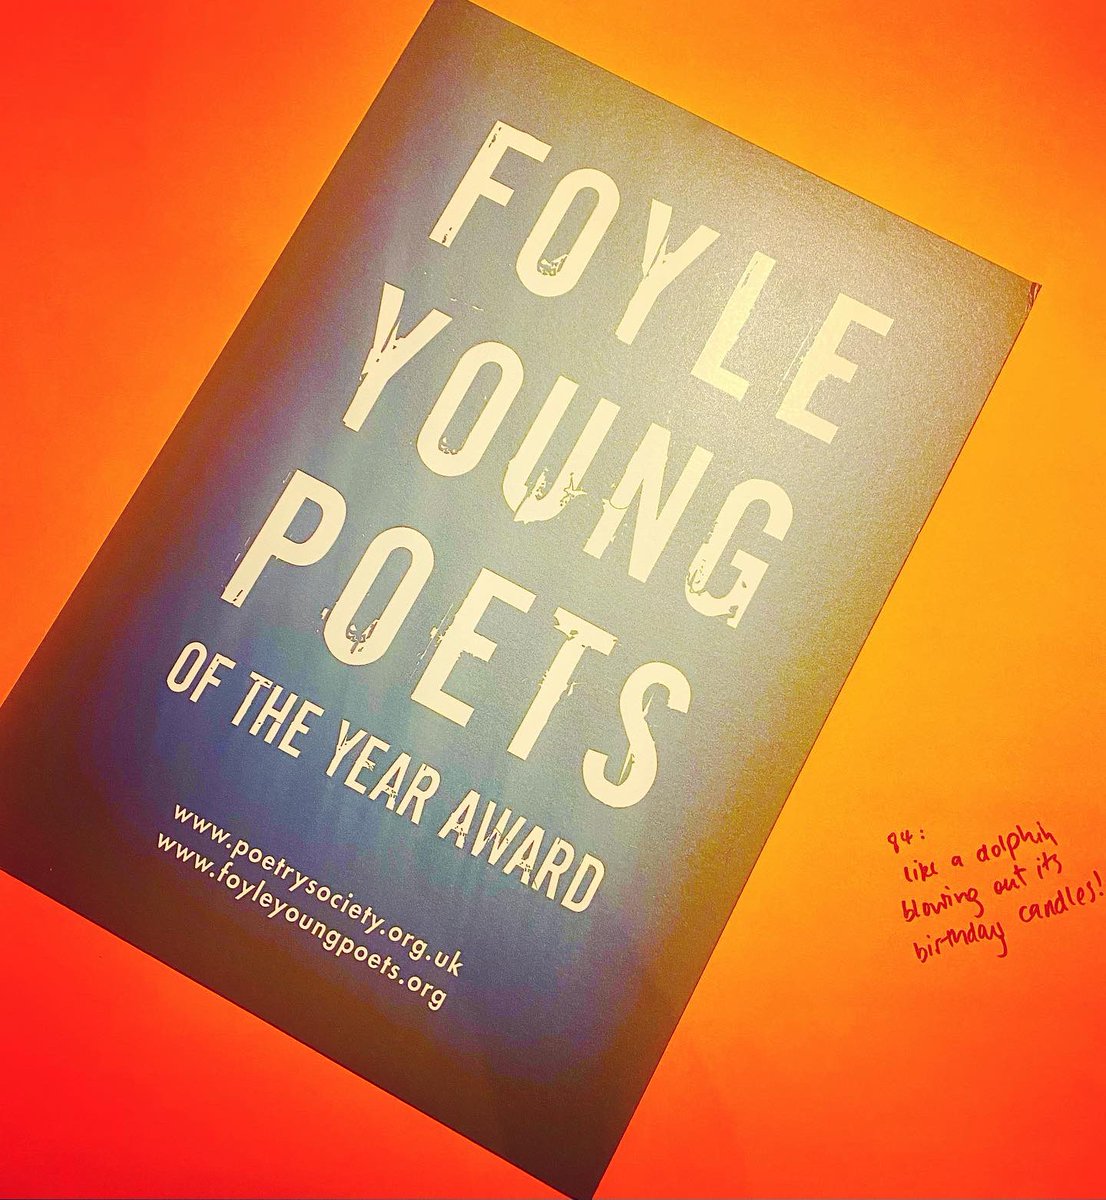 @PoetrySociety #FoyleYoungPoets taking over the Globe! @The_Globe